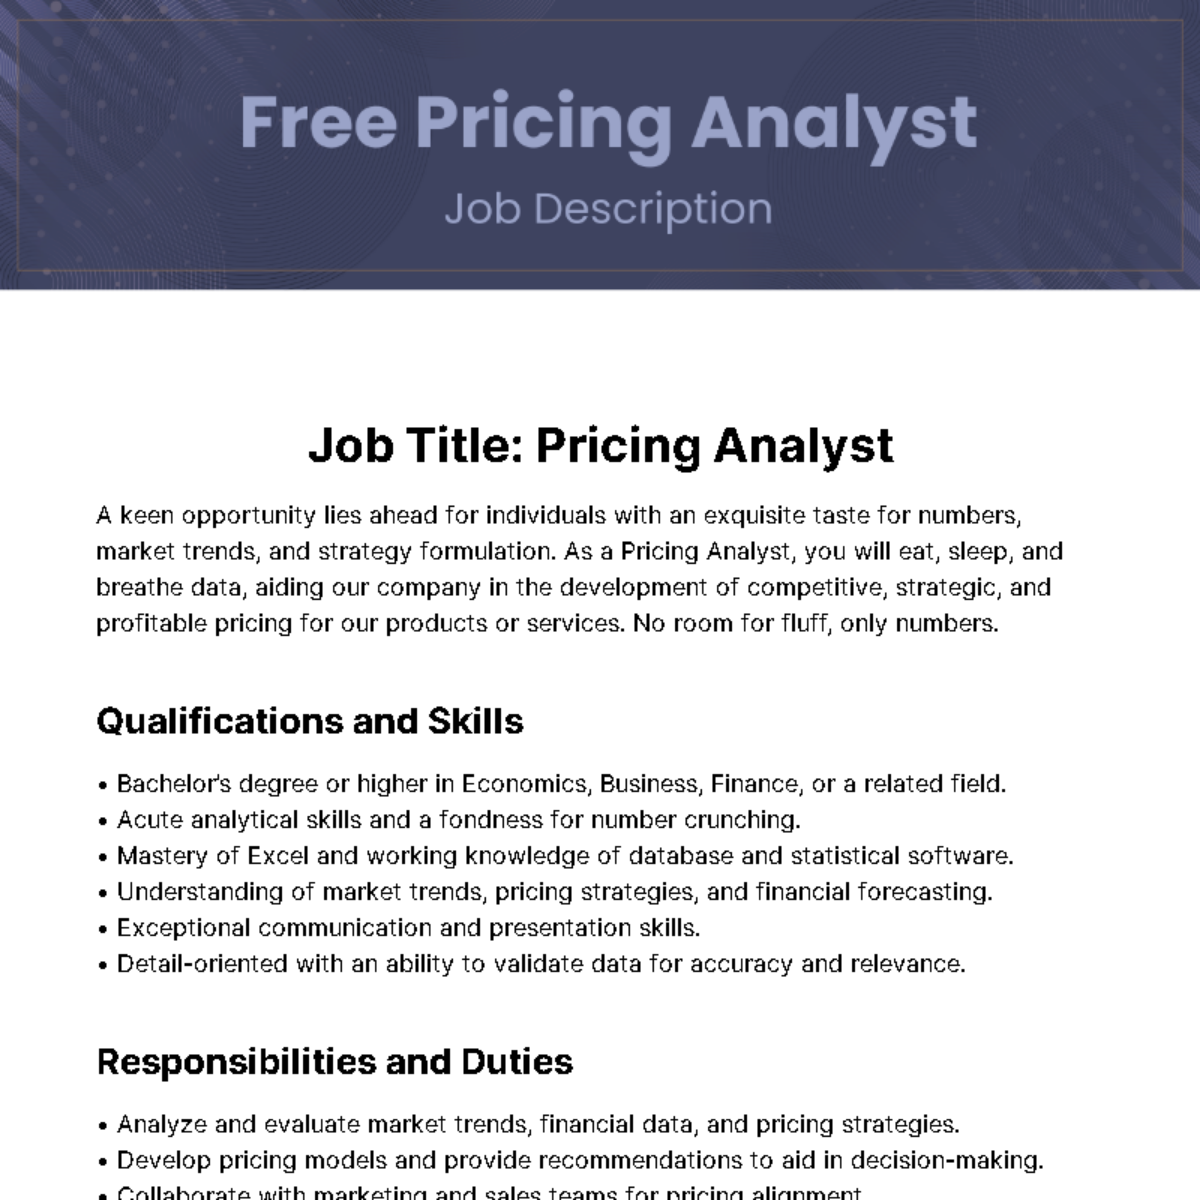 Pricing Analyst Job Description Template